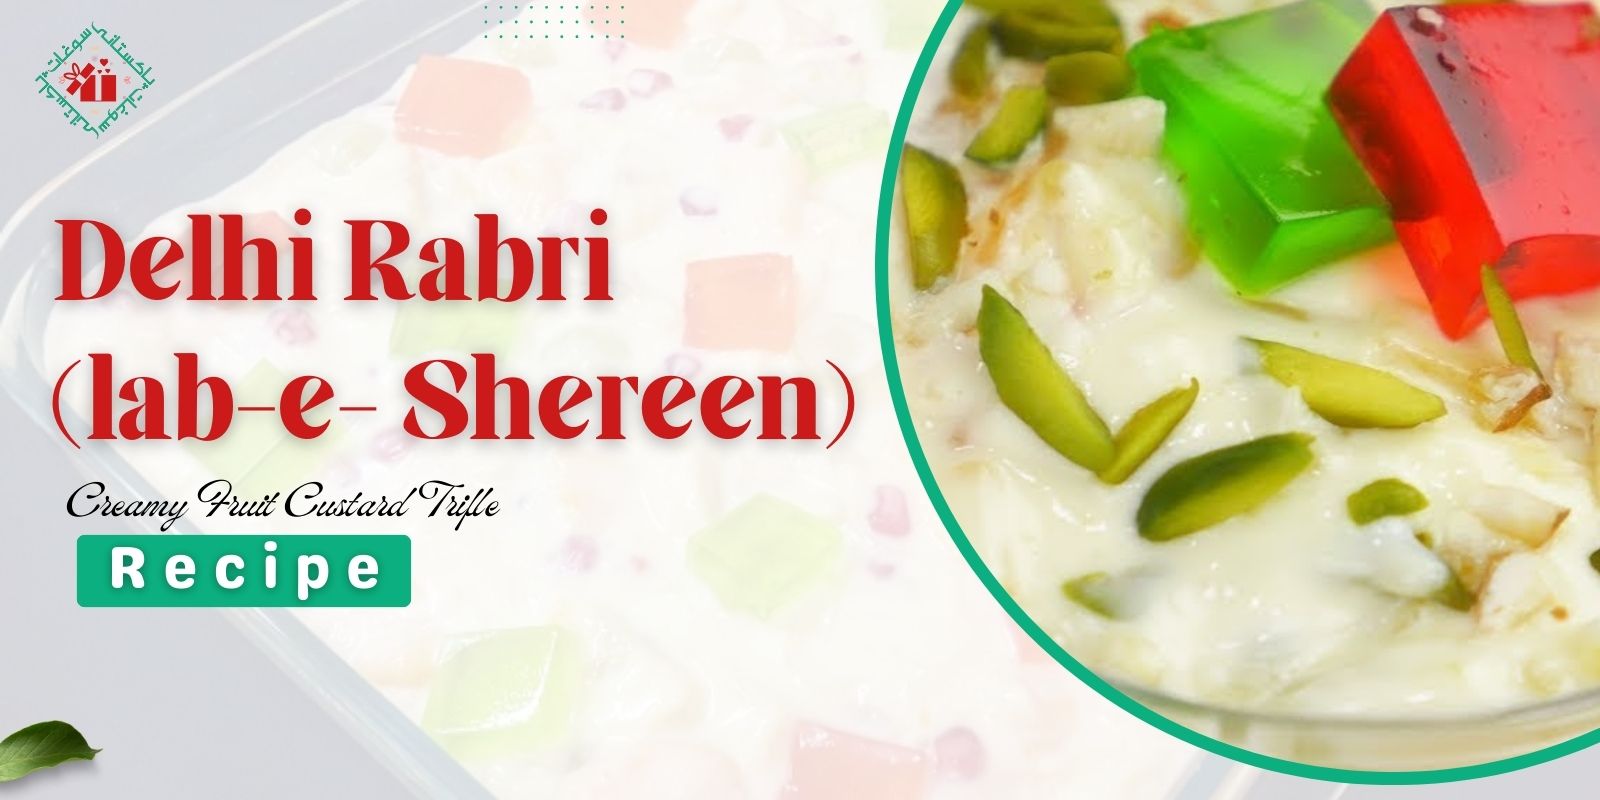 Rabri (lab-e- shereen) Recipe